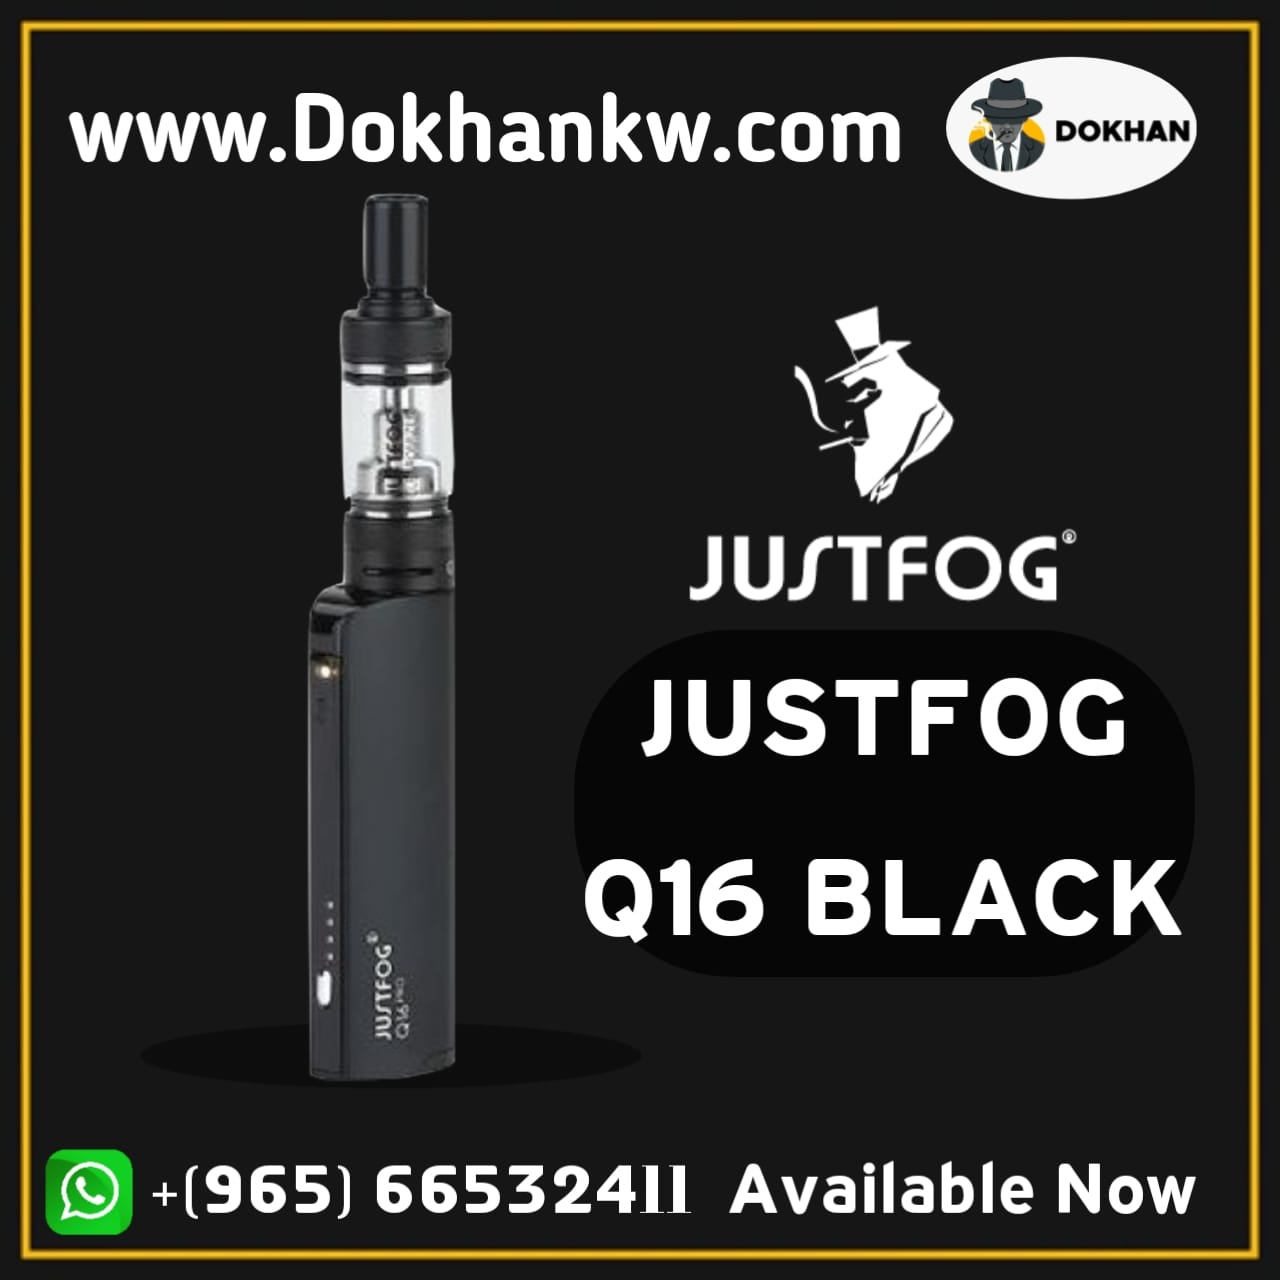 JUSTFOG Q16 BLACK